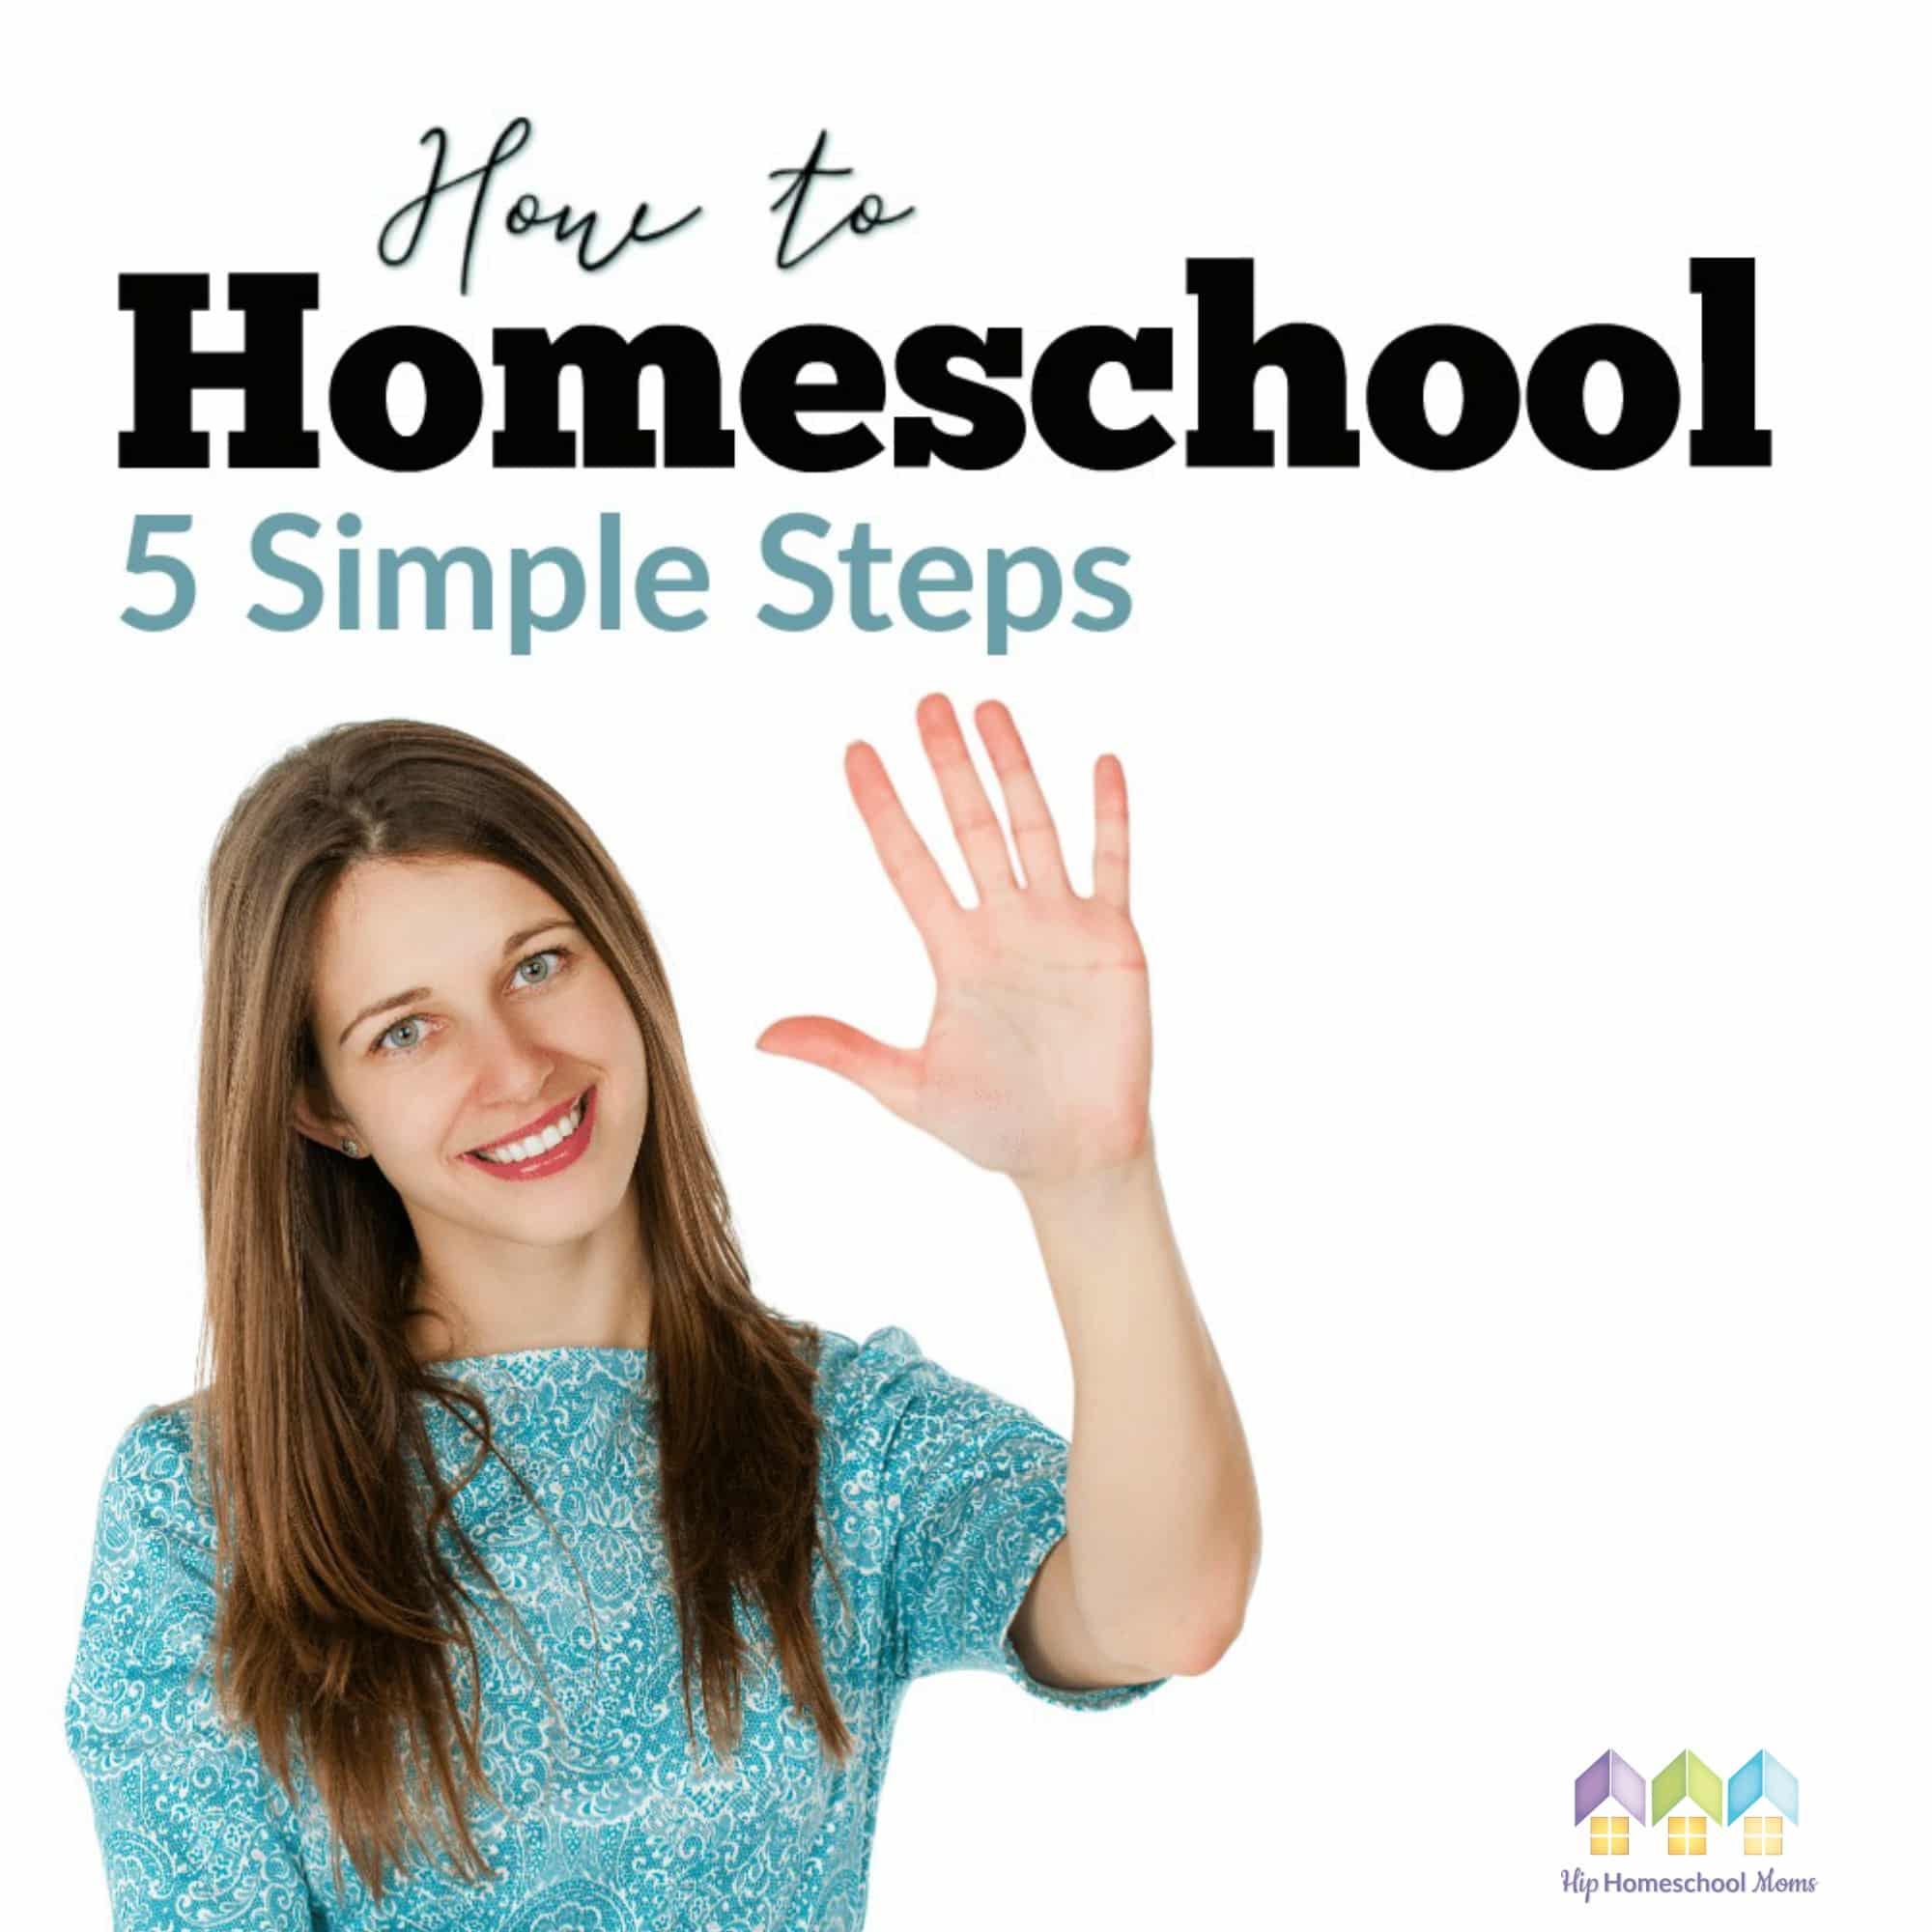 How to Homeschool: 5 Simple Steps